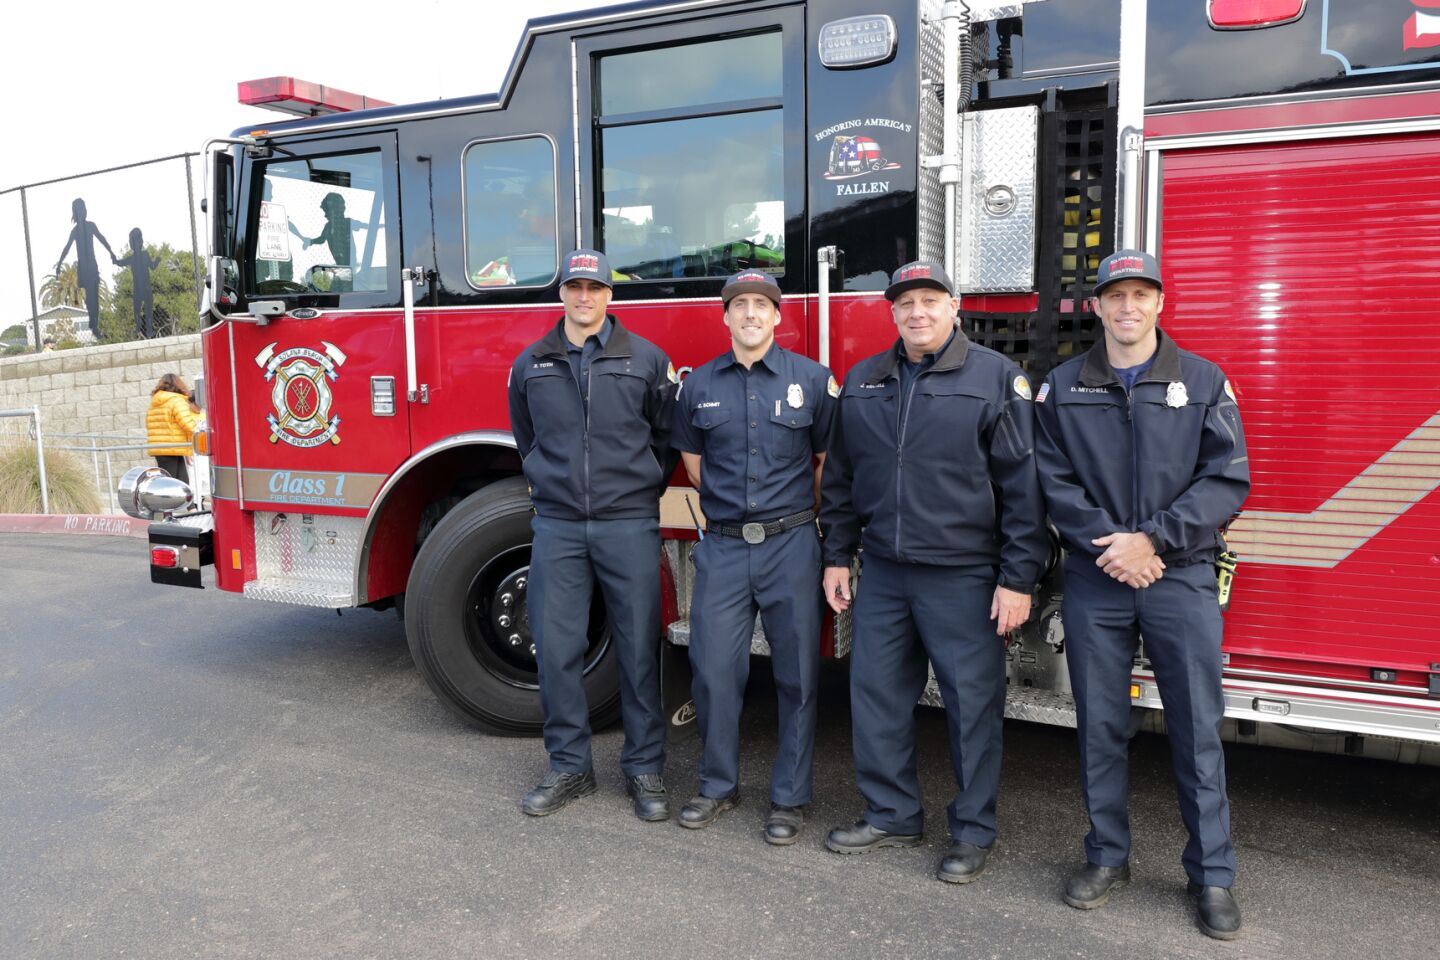 Solana Beach firefighters on hand for Little League Opening Day: Zach Toth, Chris Schmidt, John Siberell, David Mitchell